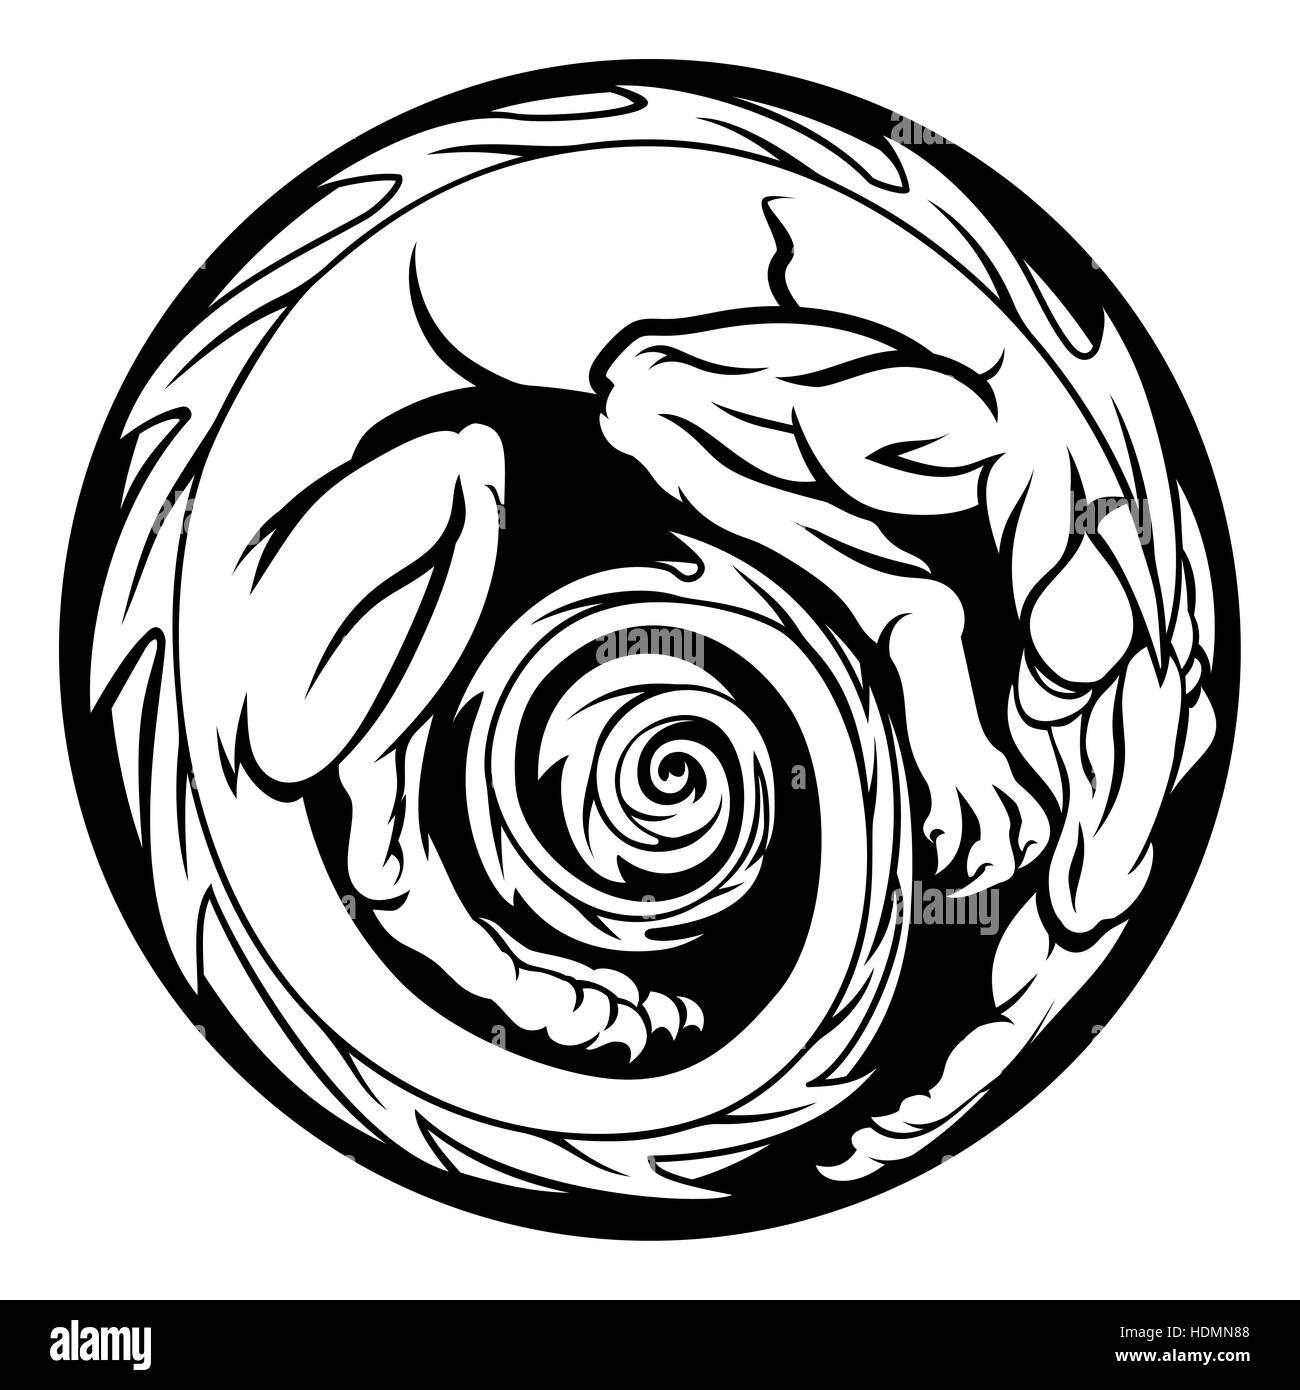 Un dragón abstracta en un diseño circular circular Foto de stock